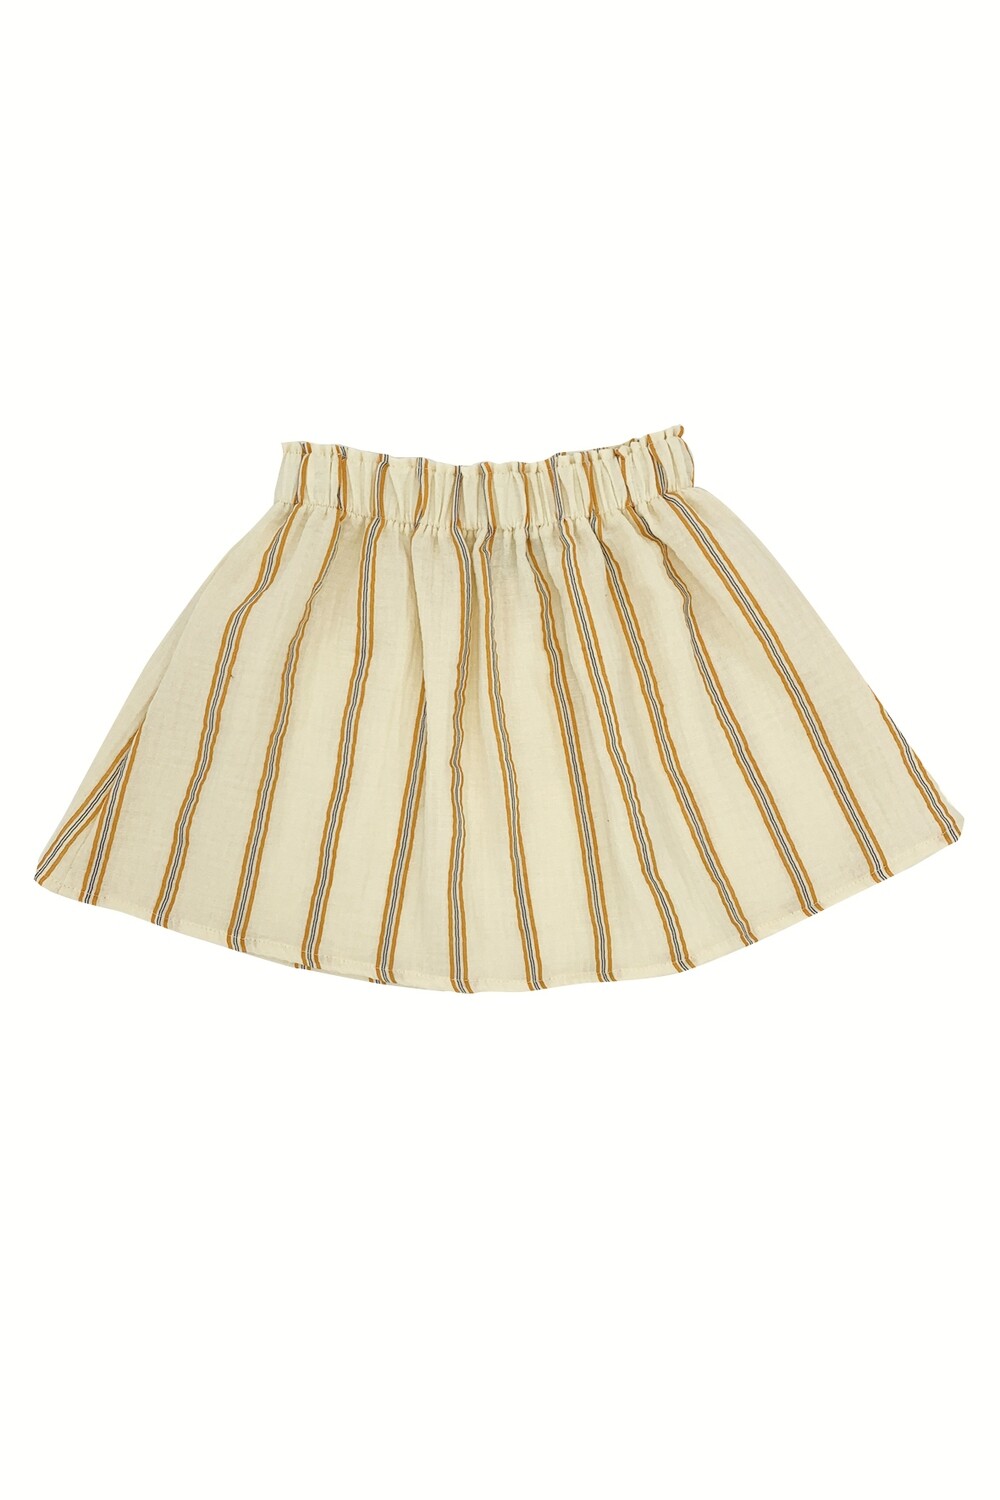 Piñata Pum - Skirt Petxina - Raw Stripe